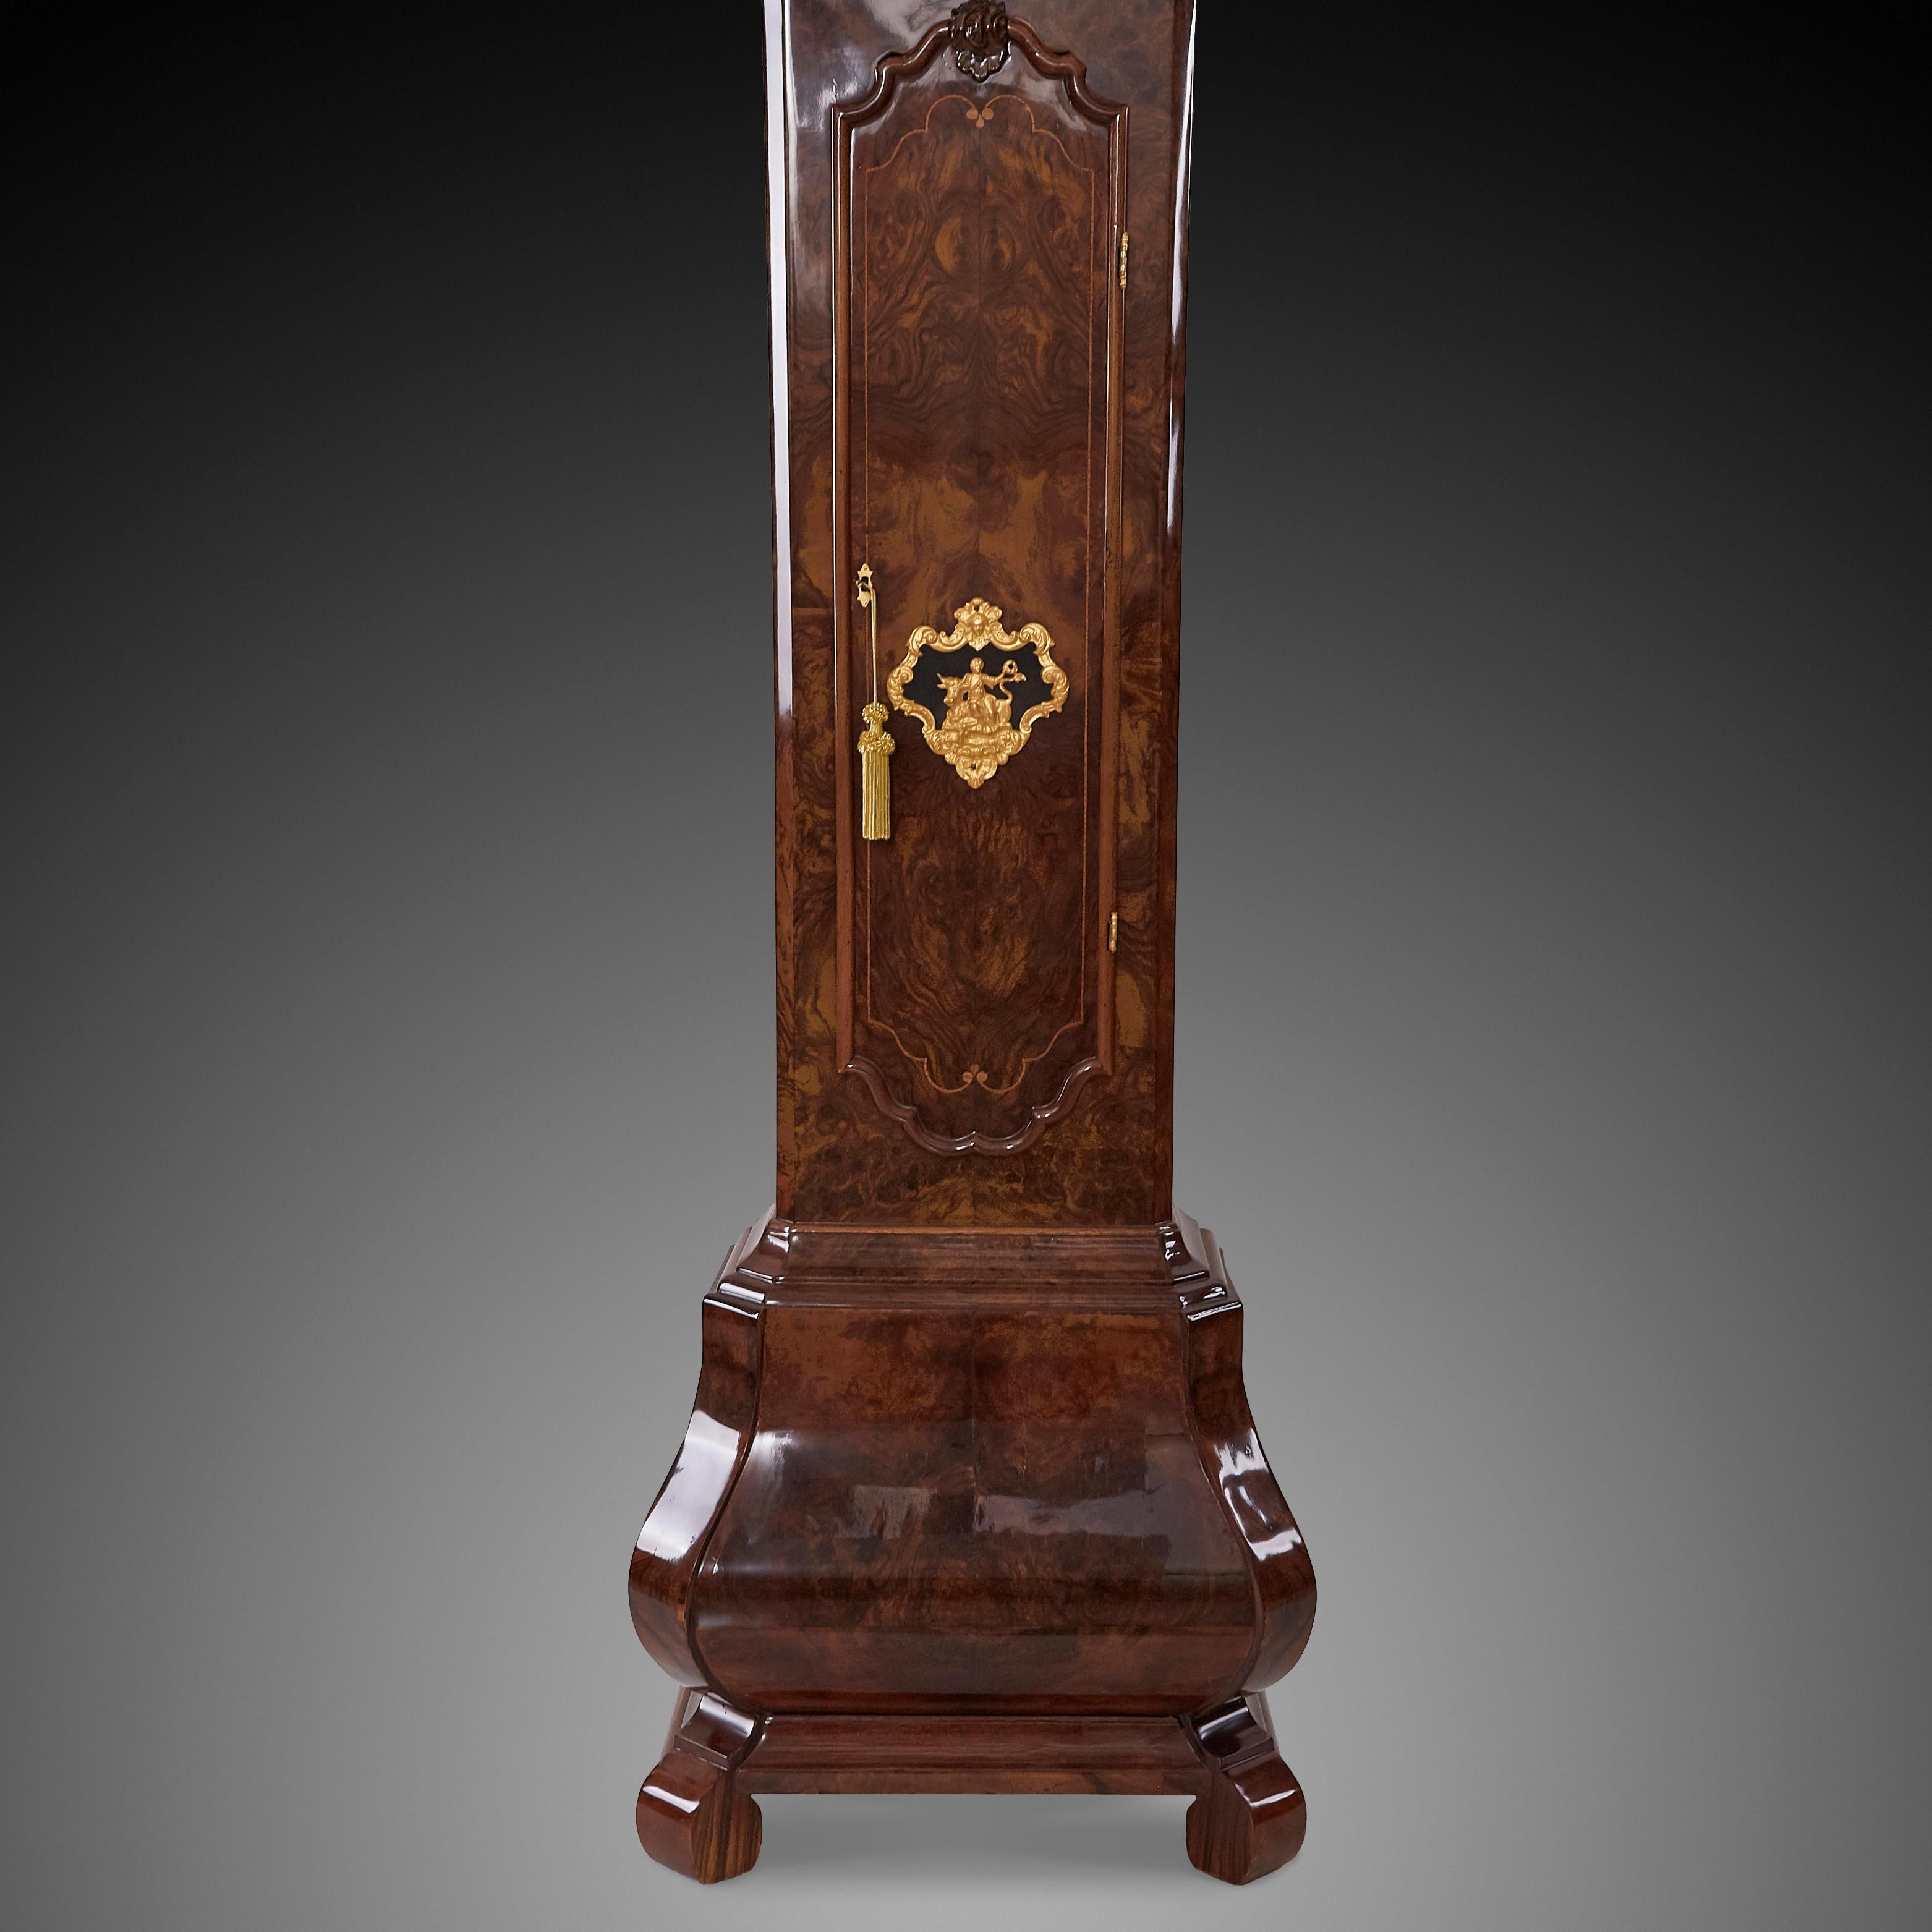 horloge 18ème siècle prix